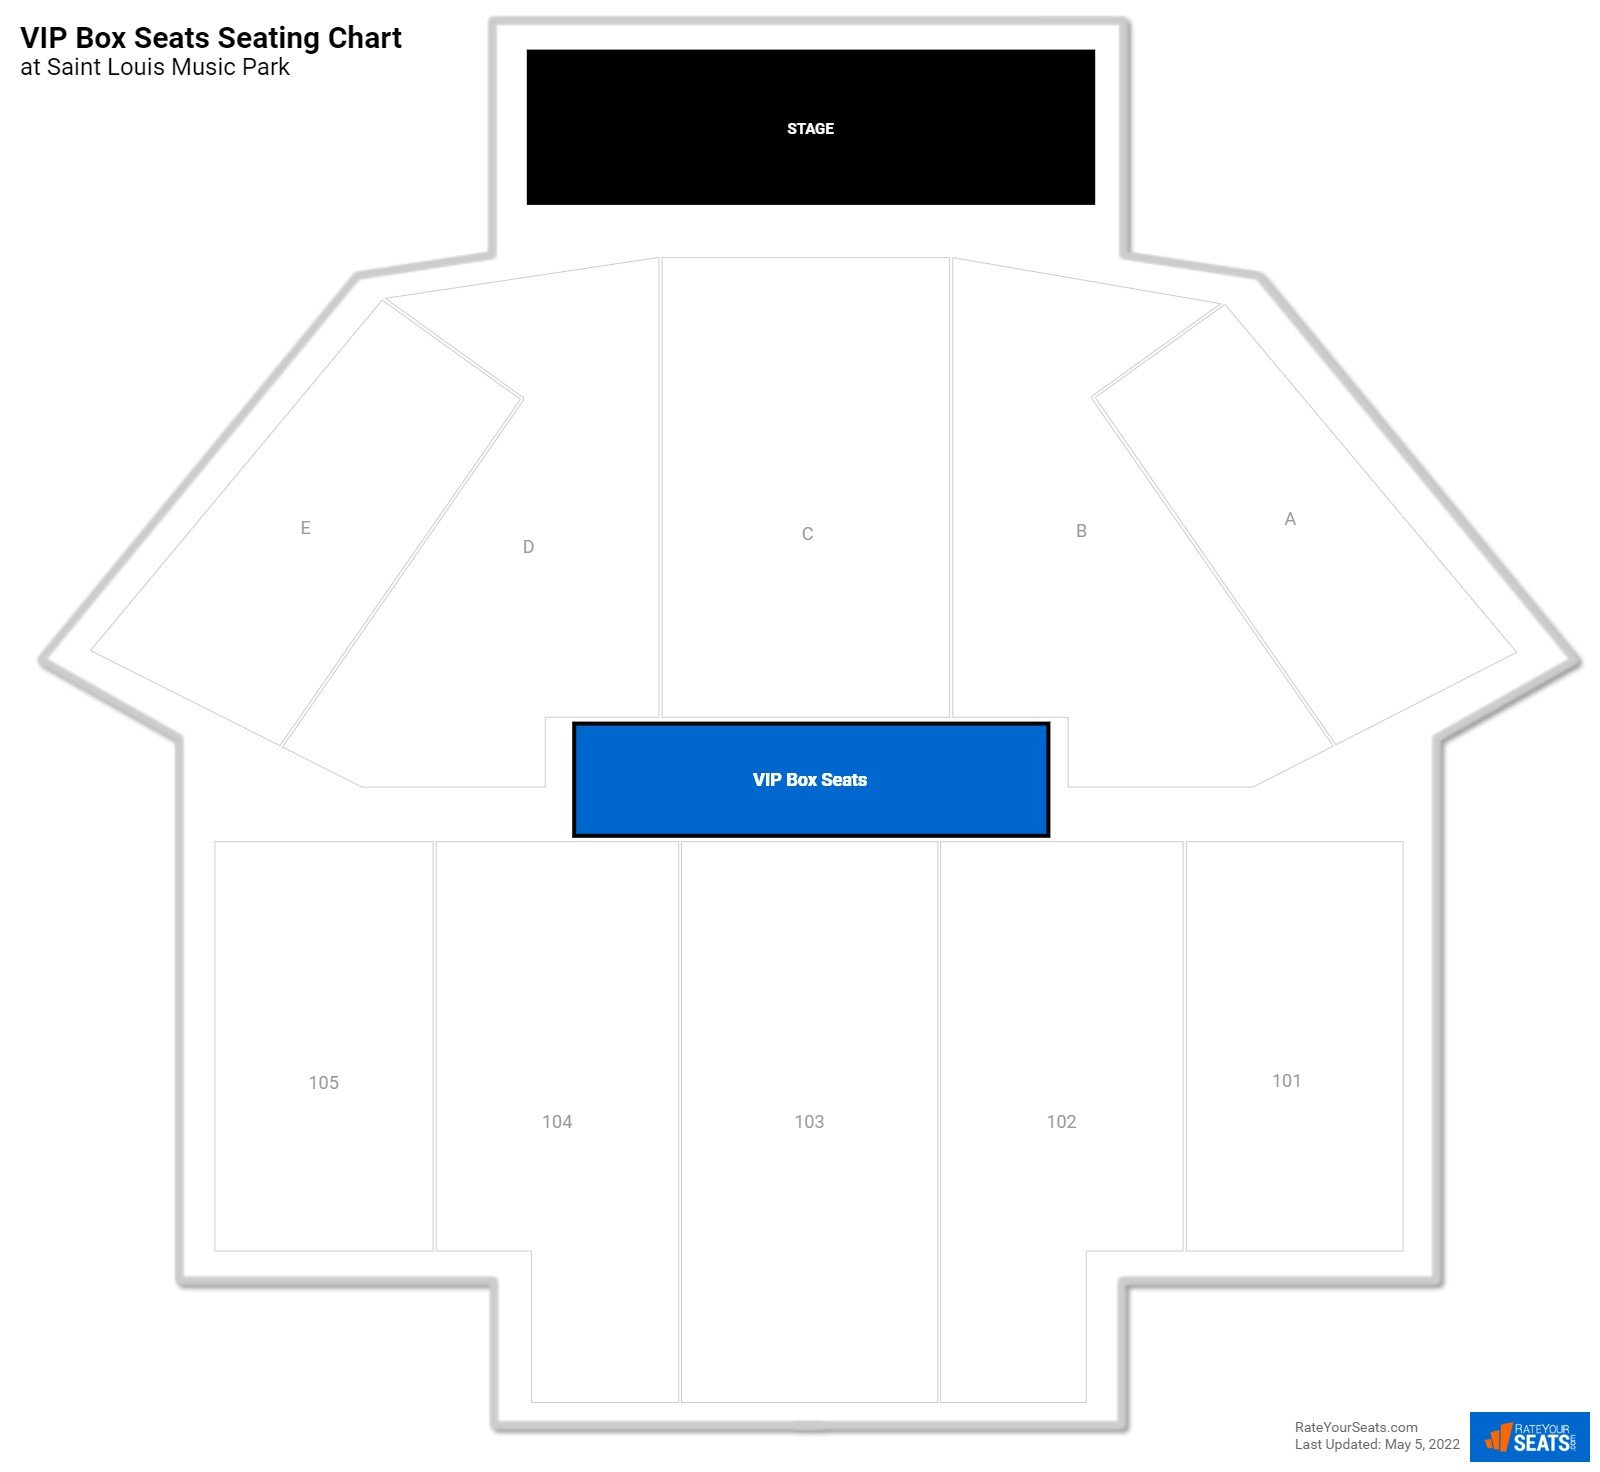 Concert VIP Box Seats Seating Chart at Saint Louis Music Park